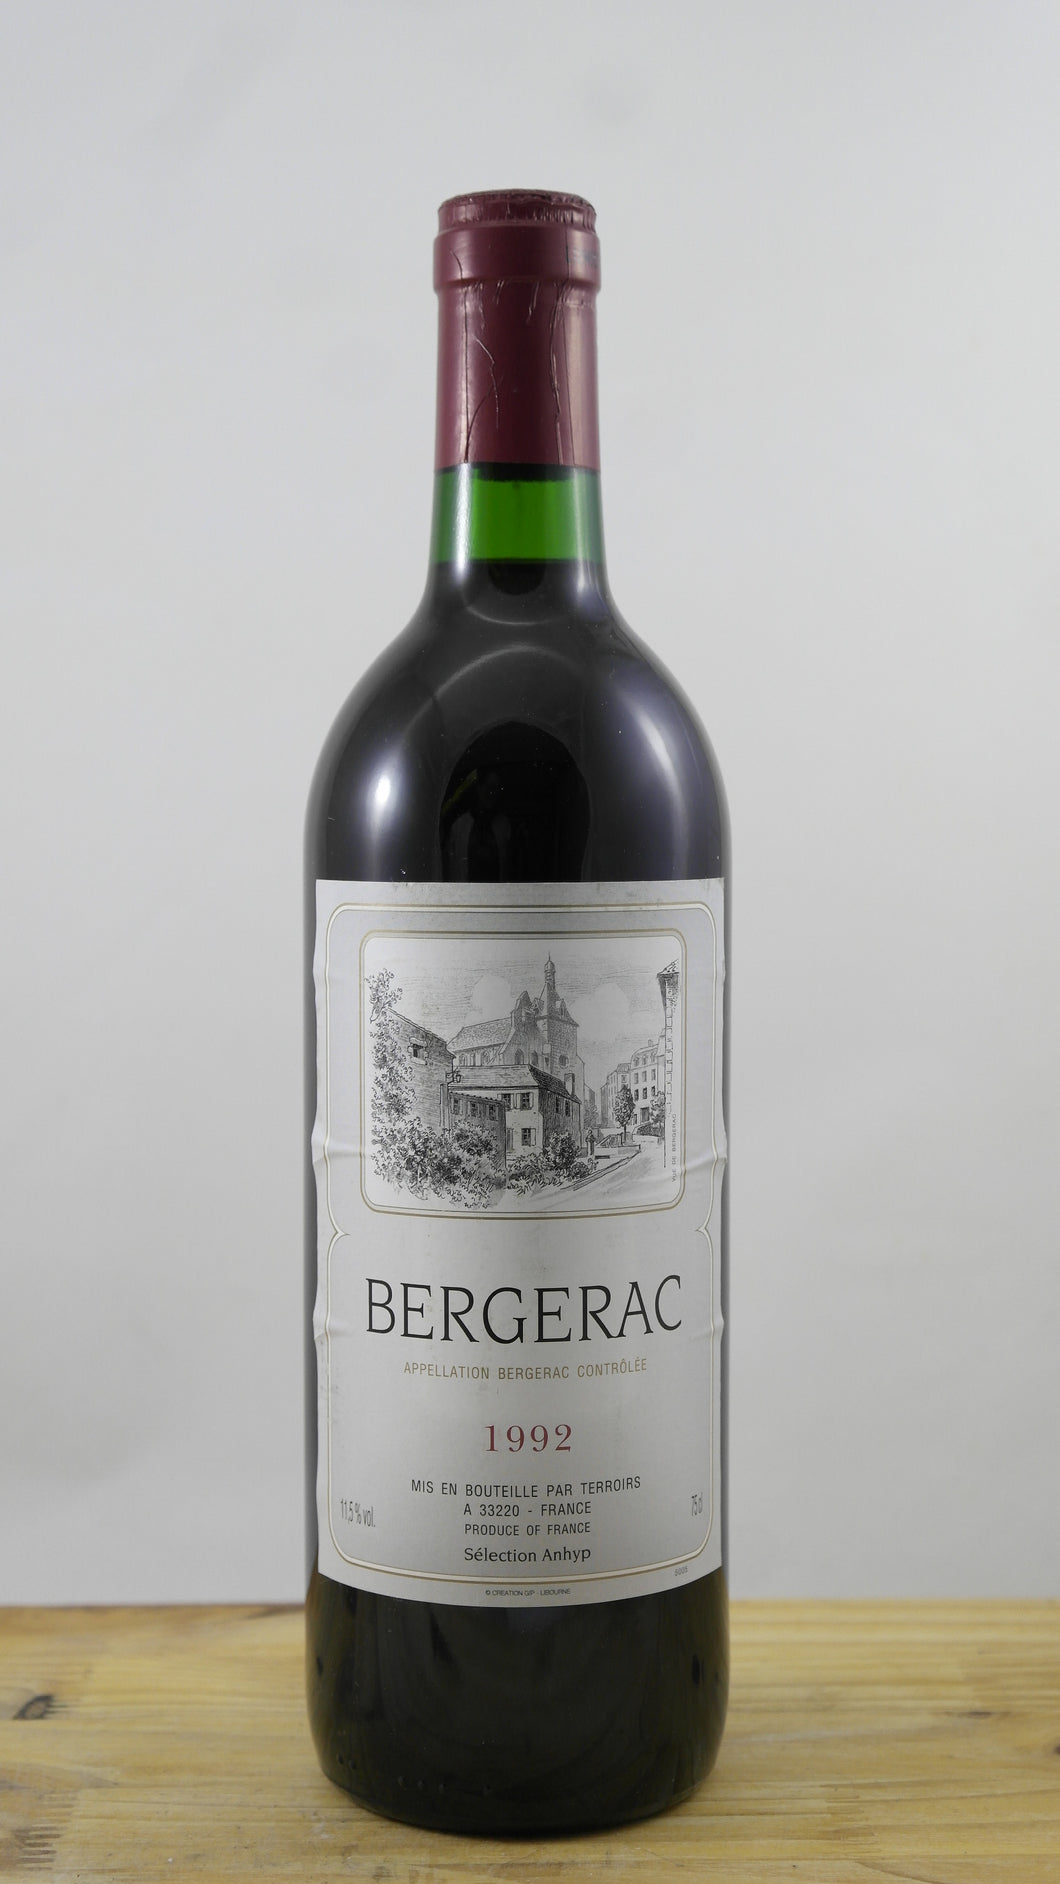 Bergerac Terroirs Sélection Anhyp Vin 1992